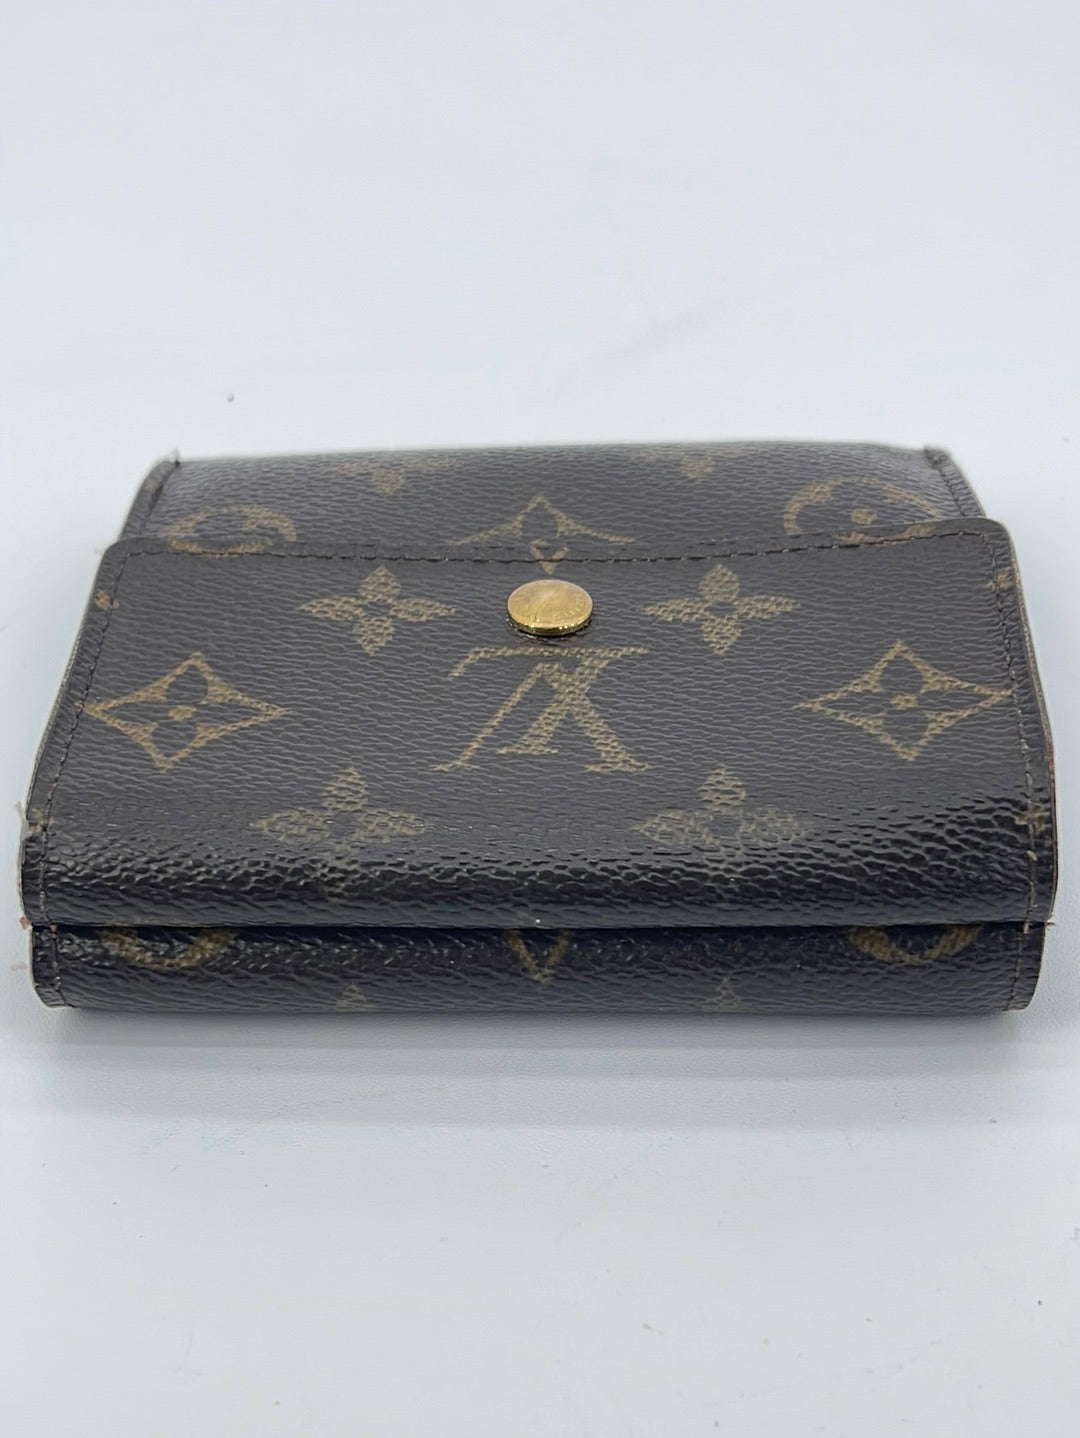 Authentic Louis Vuitton Monogram Elise Wallet – TLB Preloved Goods